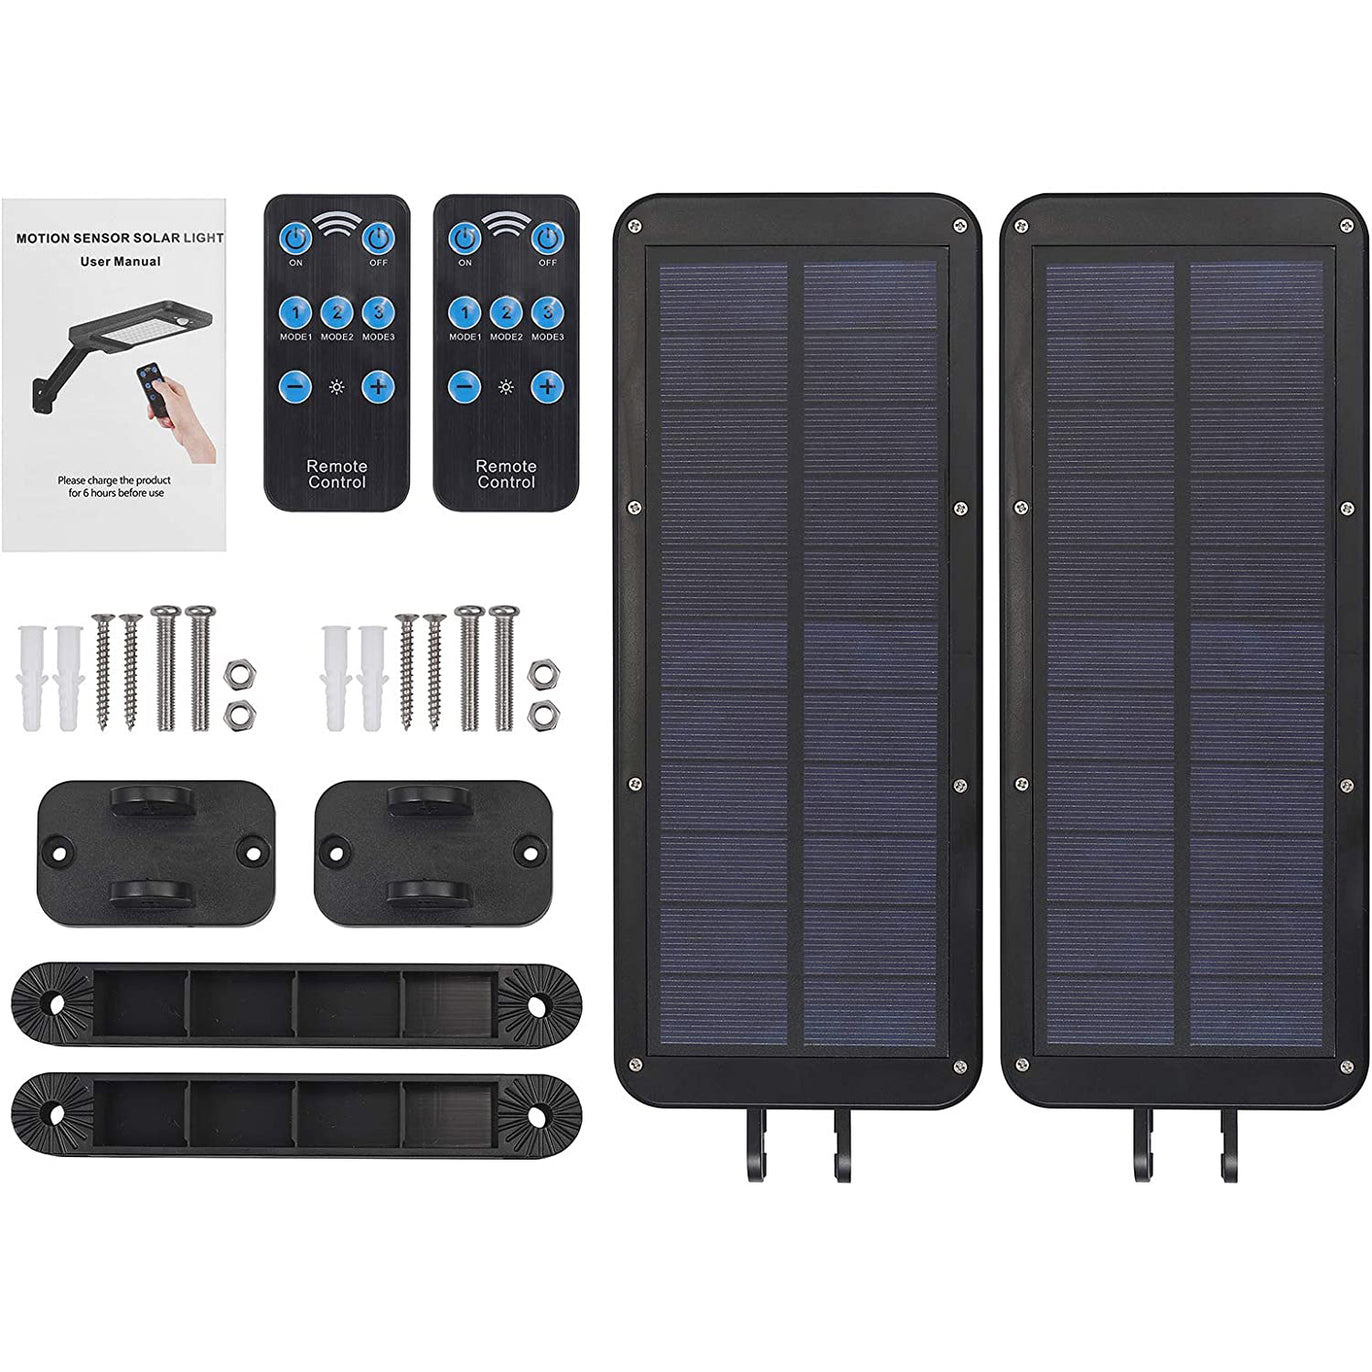 PROZOR Solar Outdoor Lights 2PCS 60 LED Remote Control Lights